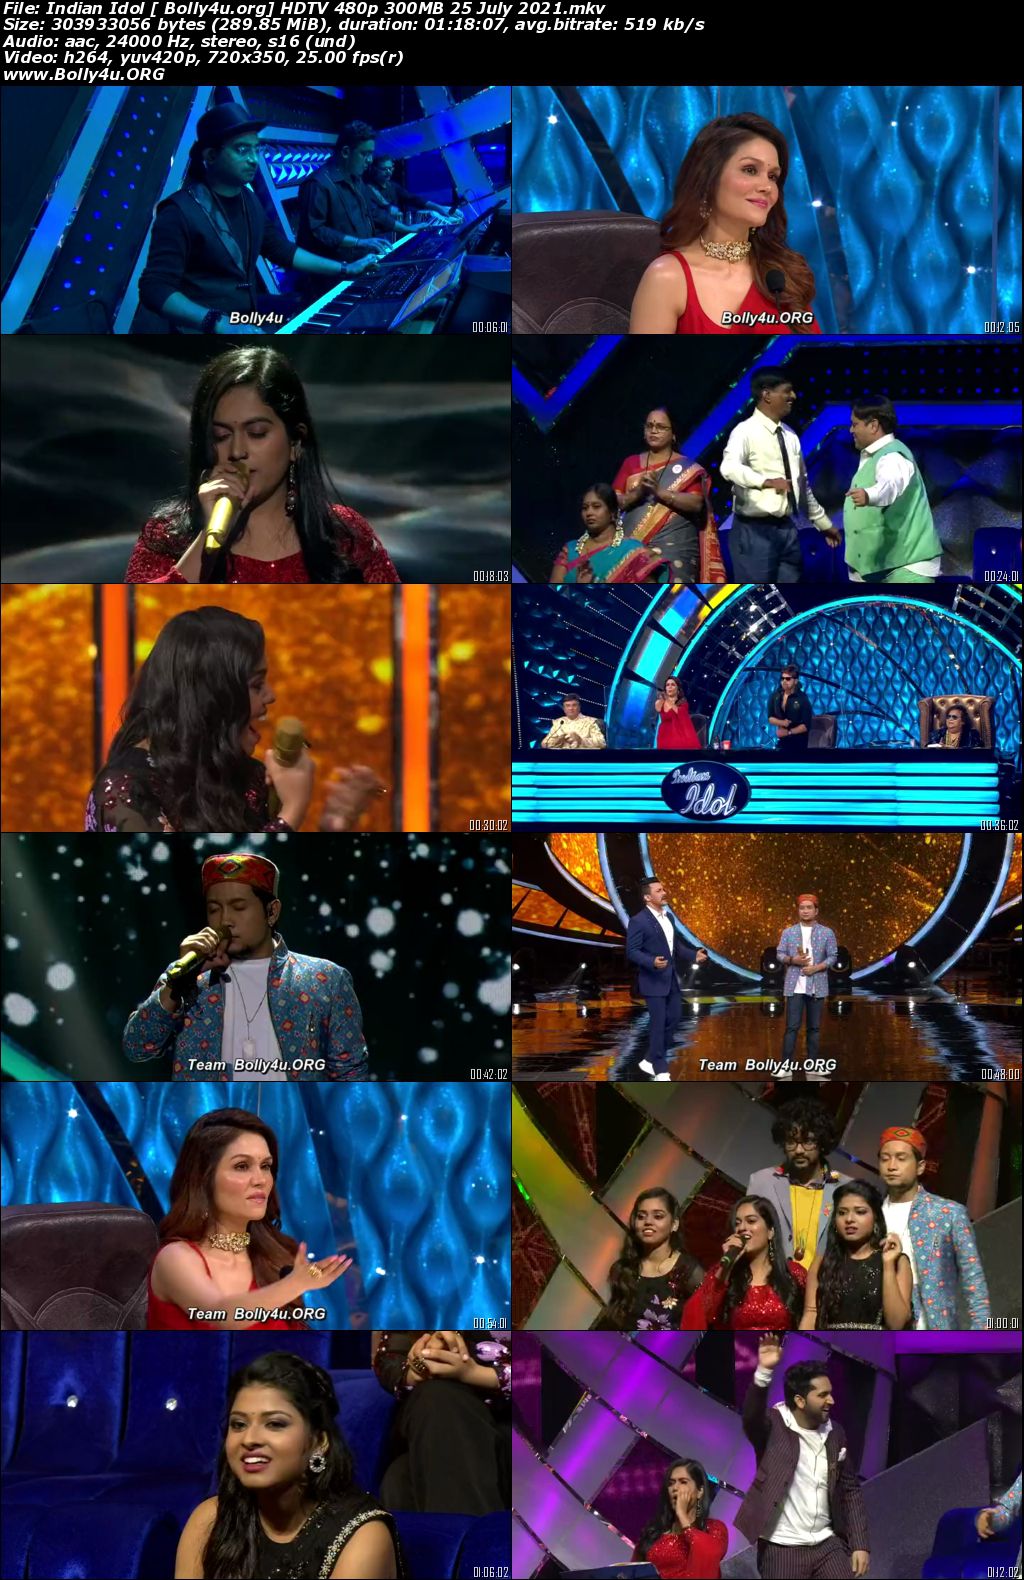 Indian Idol HDTV 480p 300MB 25 July 2021 Download